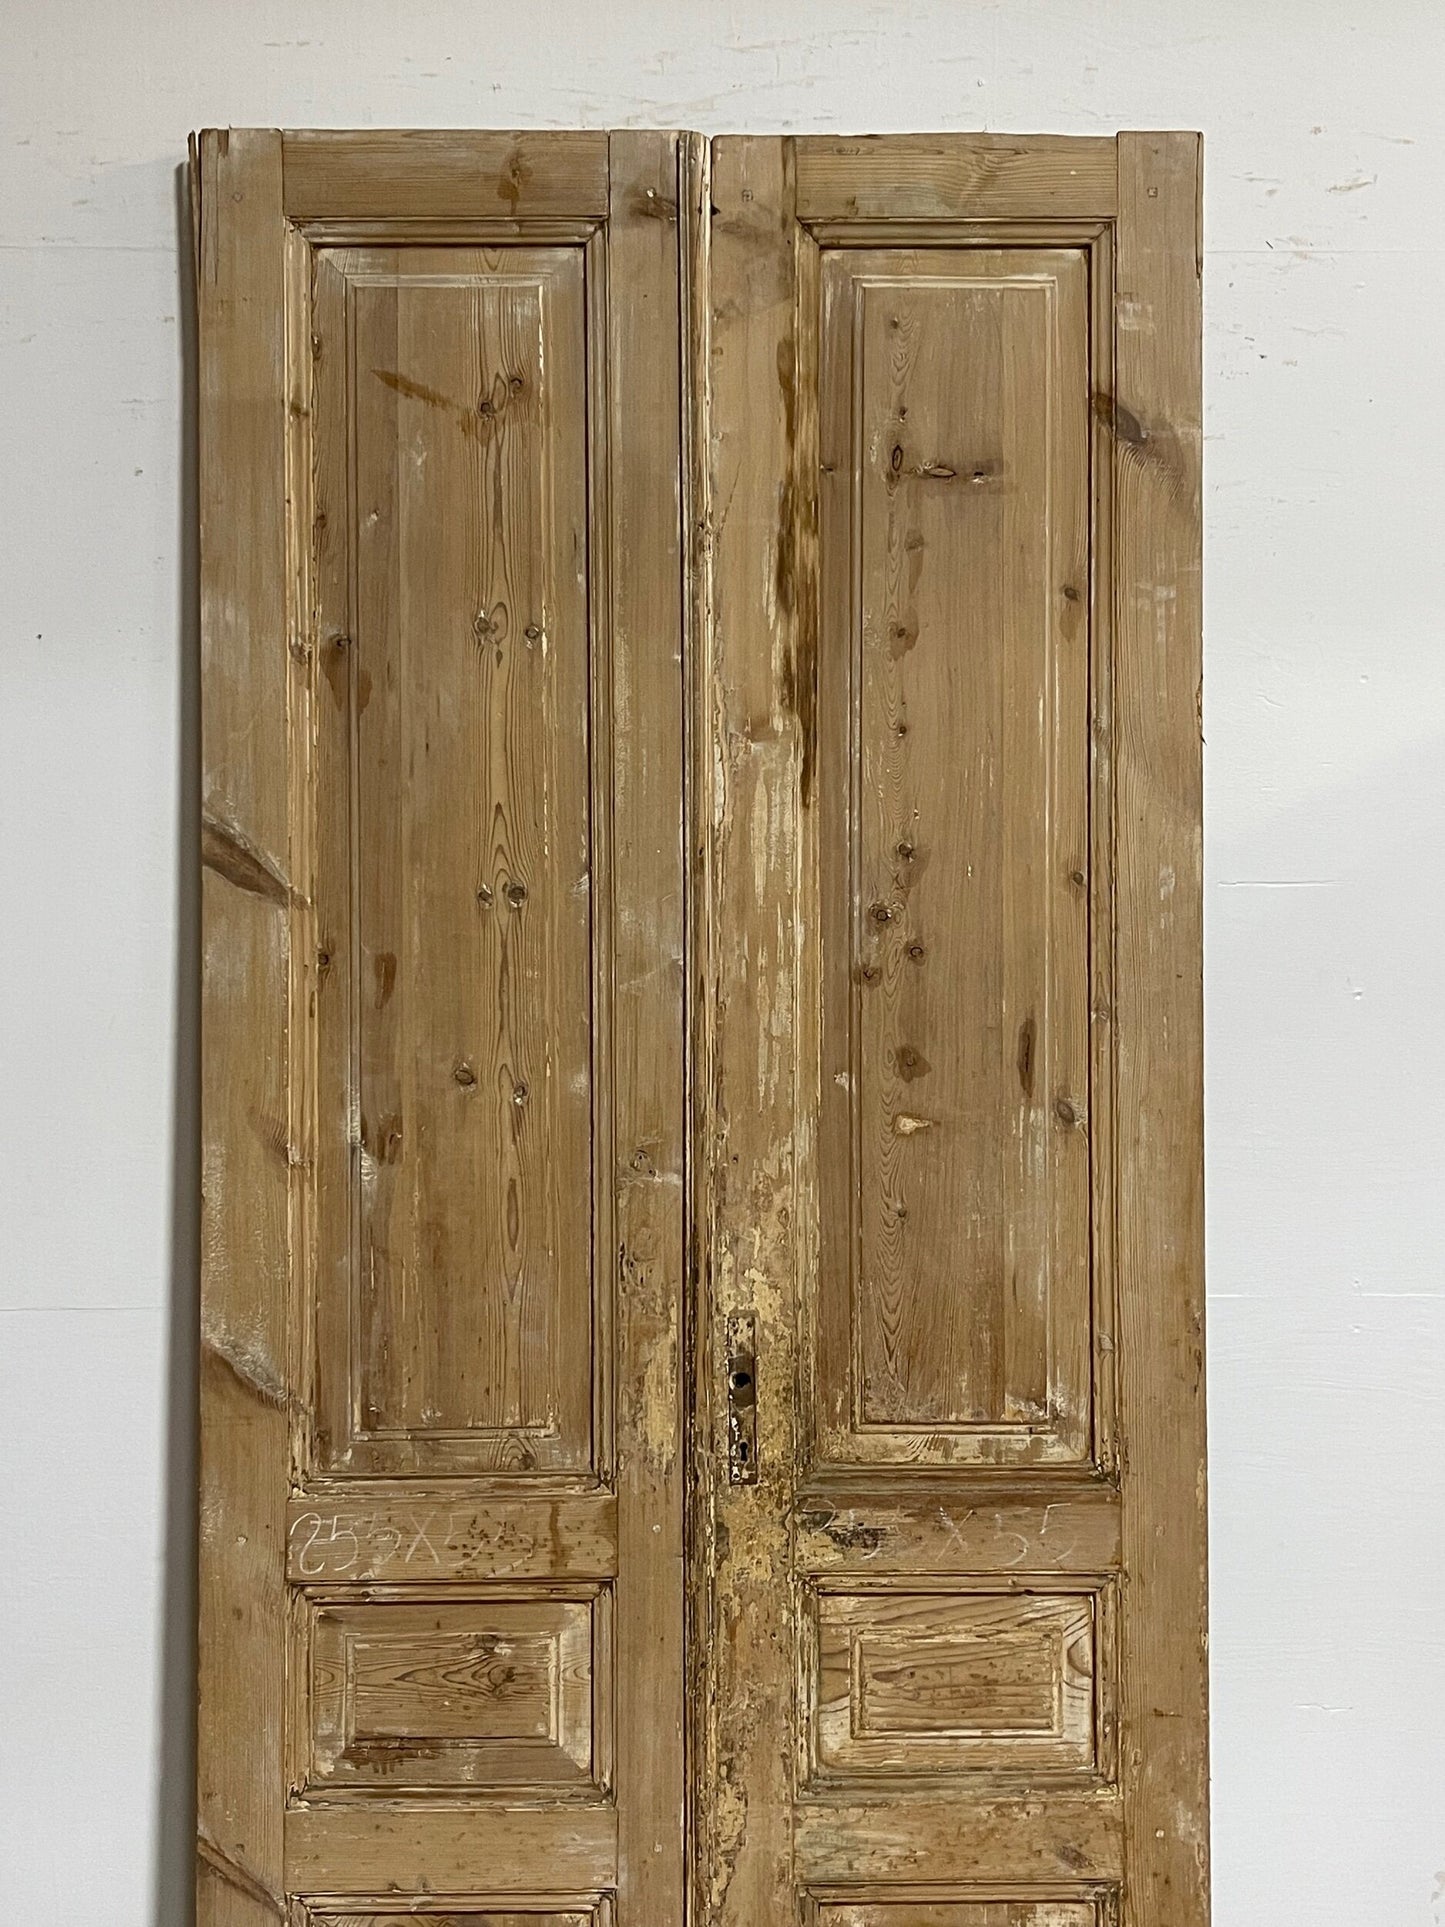 Antique French doors (100.5x44.25) H0079s